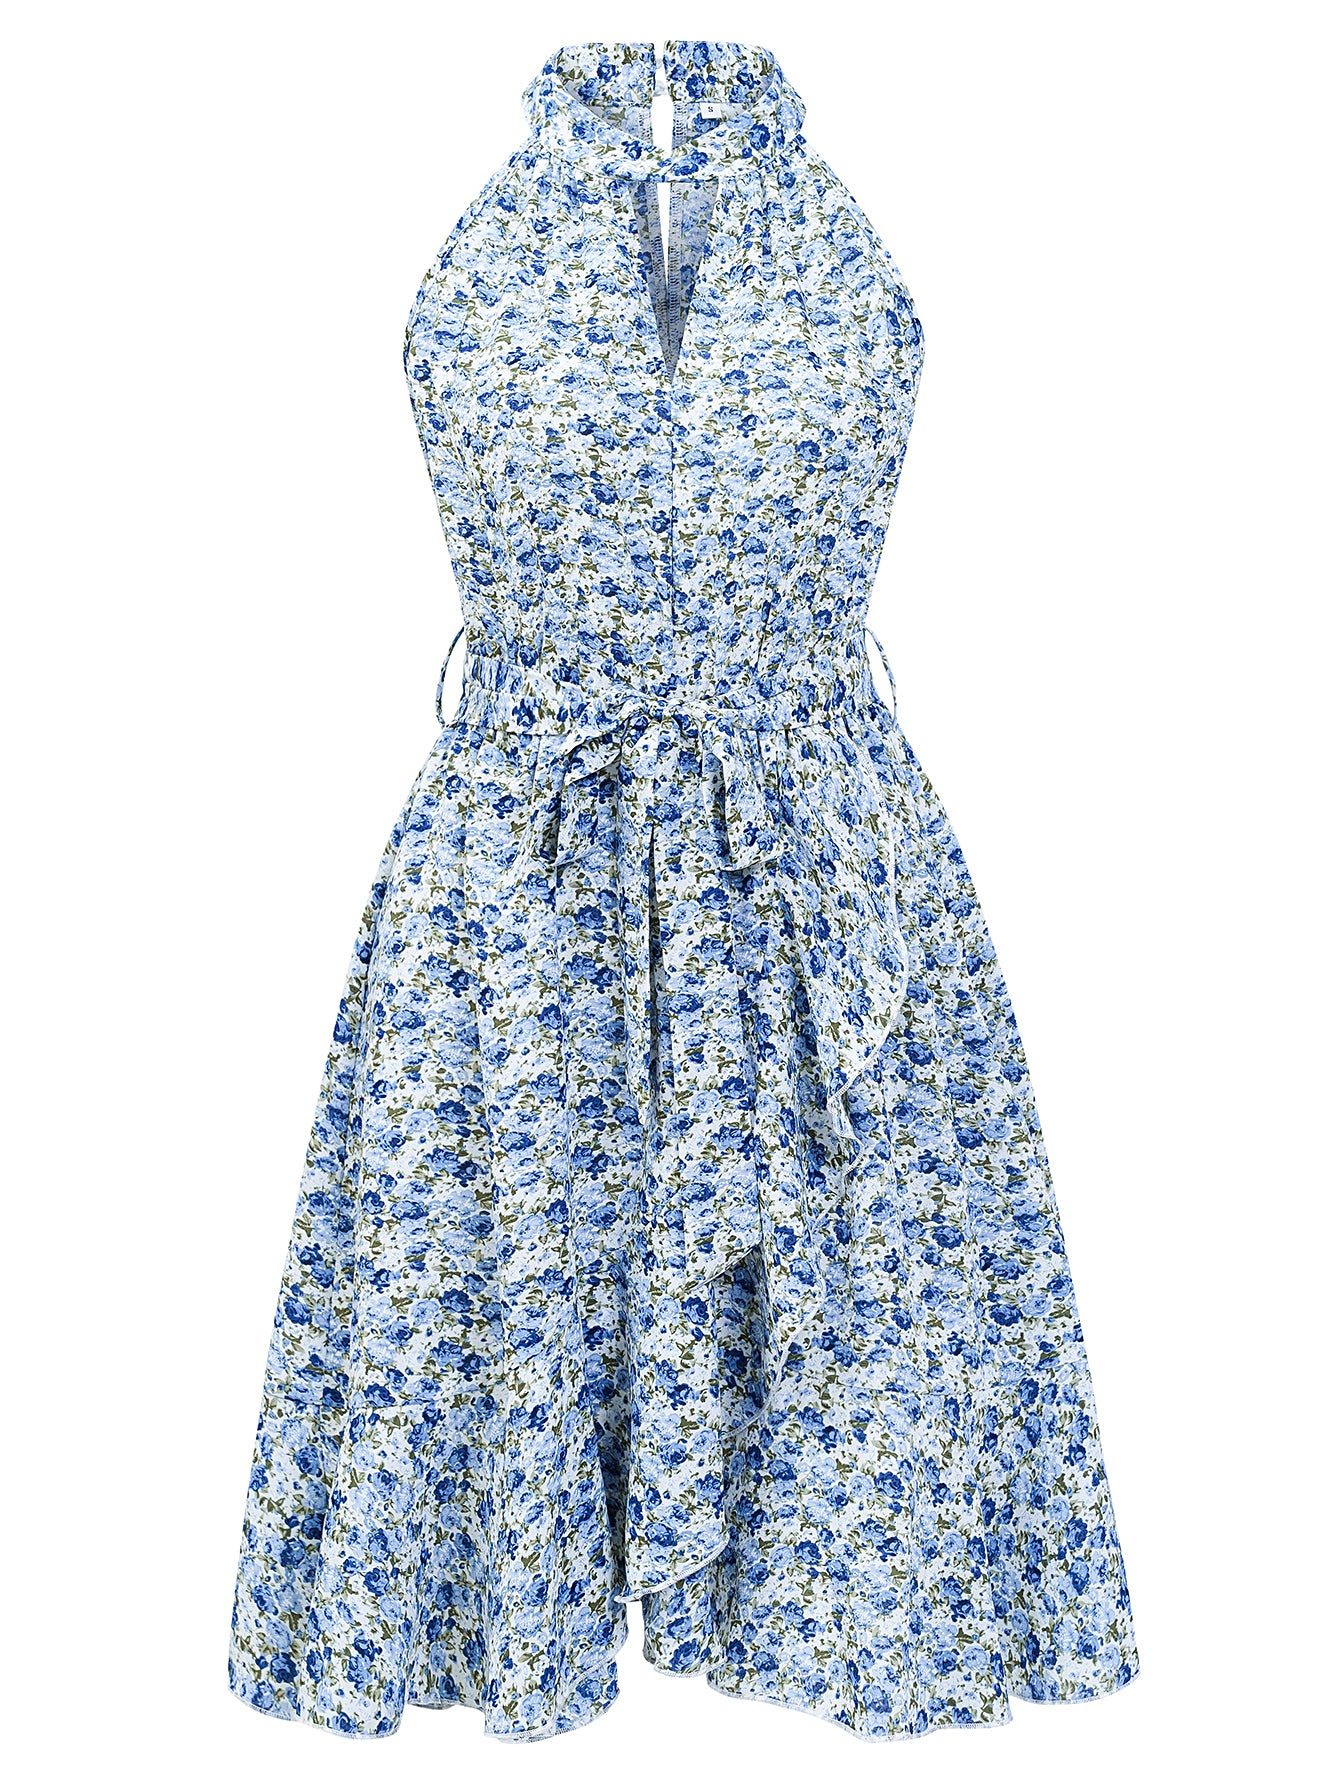 Women Halterneck Floral Print Sleeveless Summer Skirt Tie Front